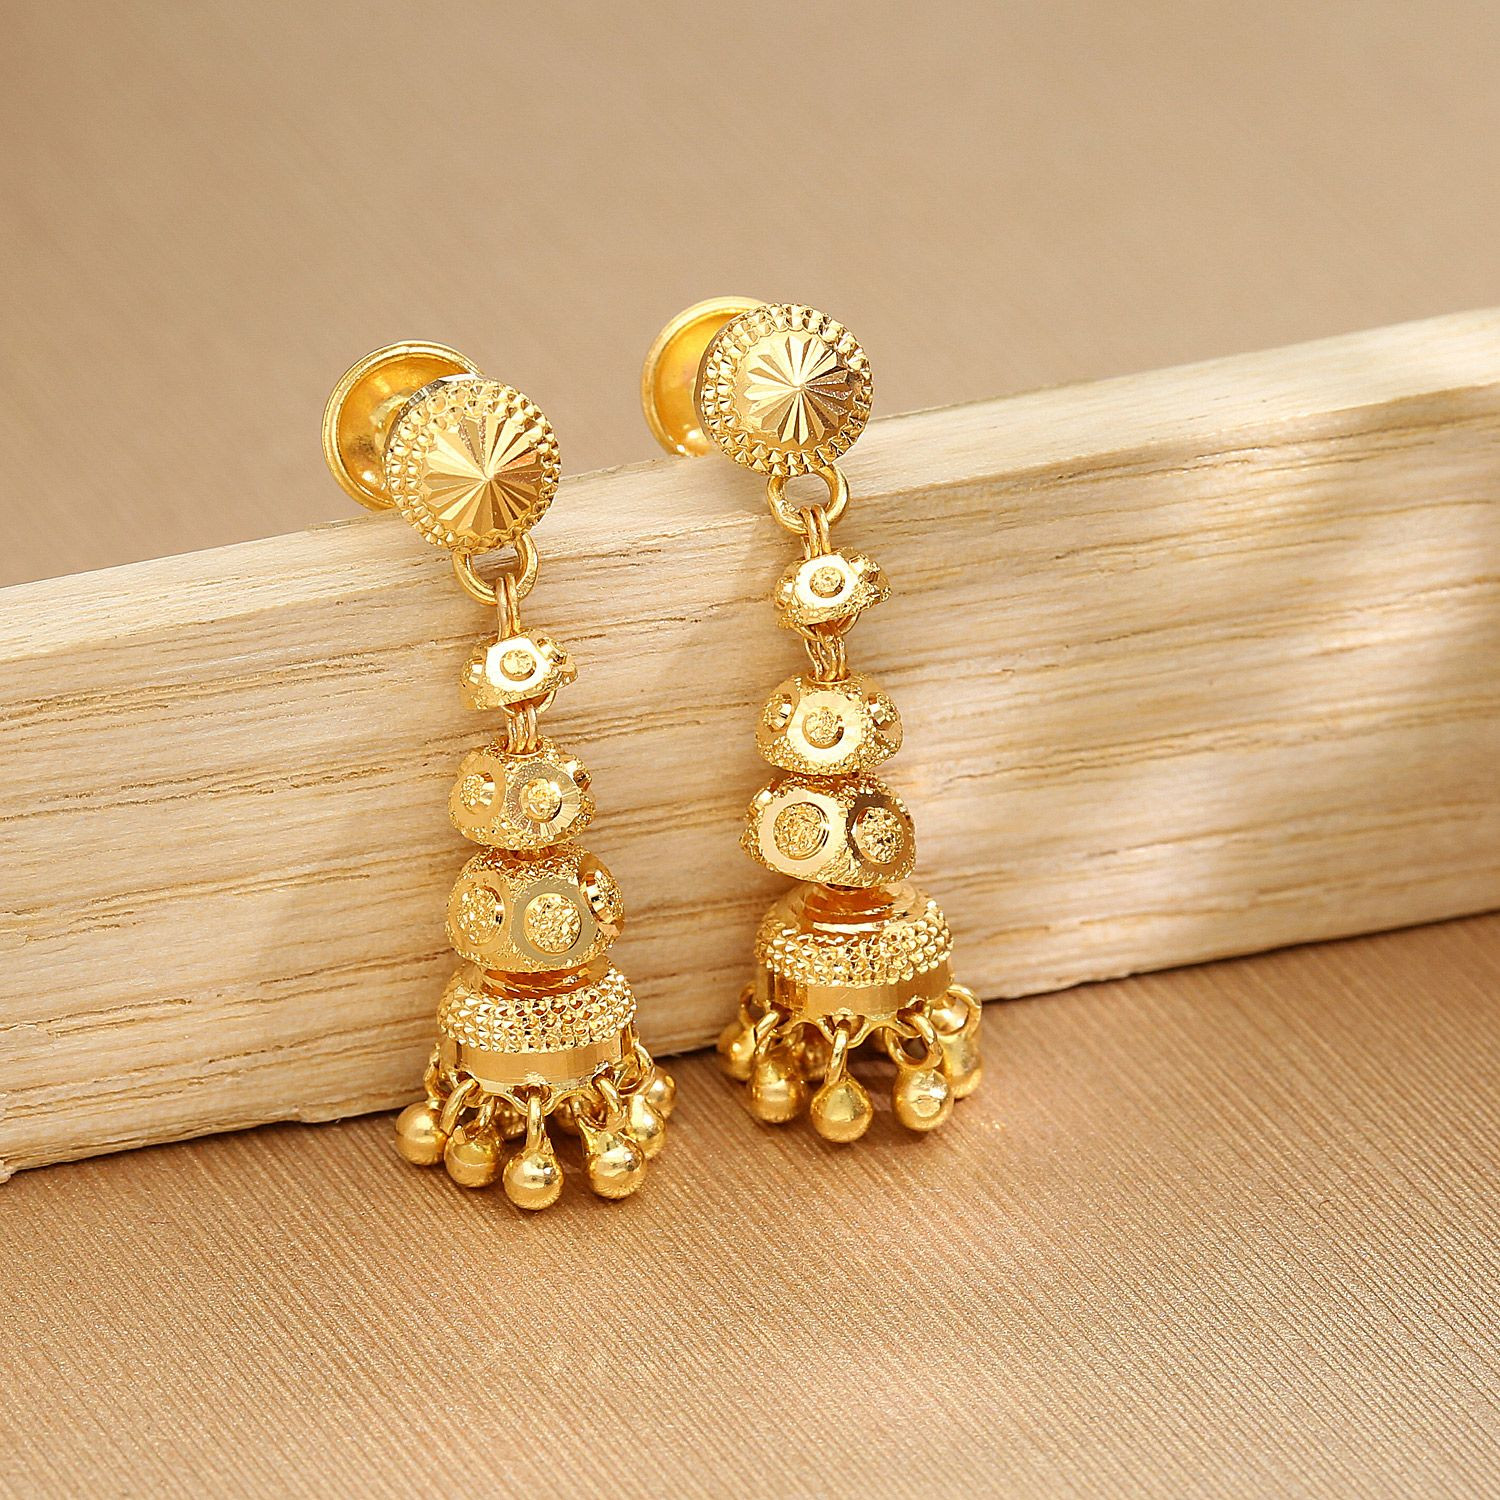 Details more than 277 malabar gold earrings best